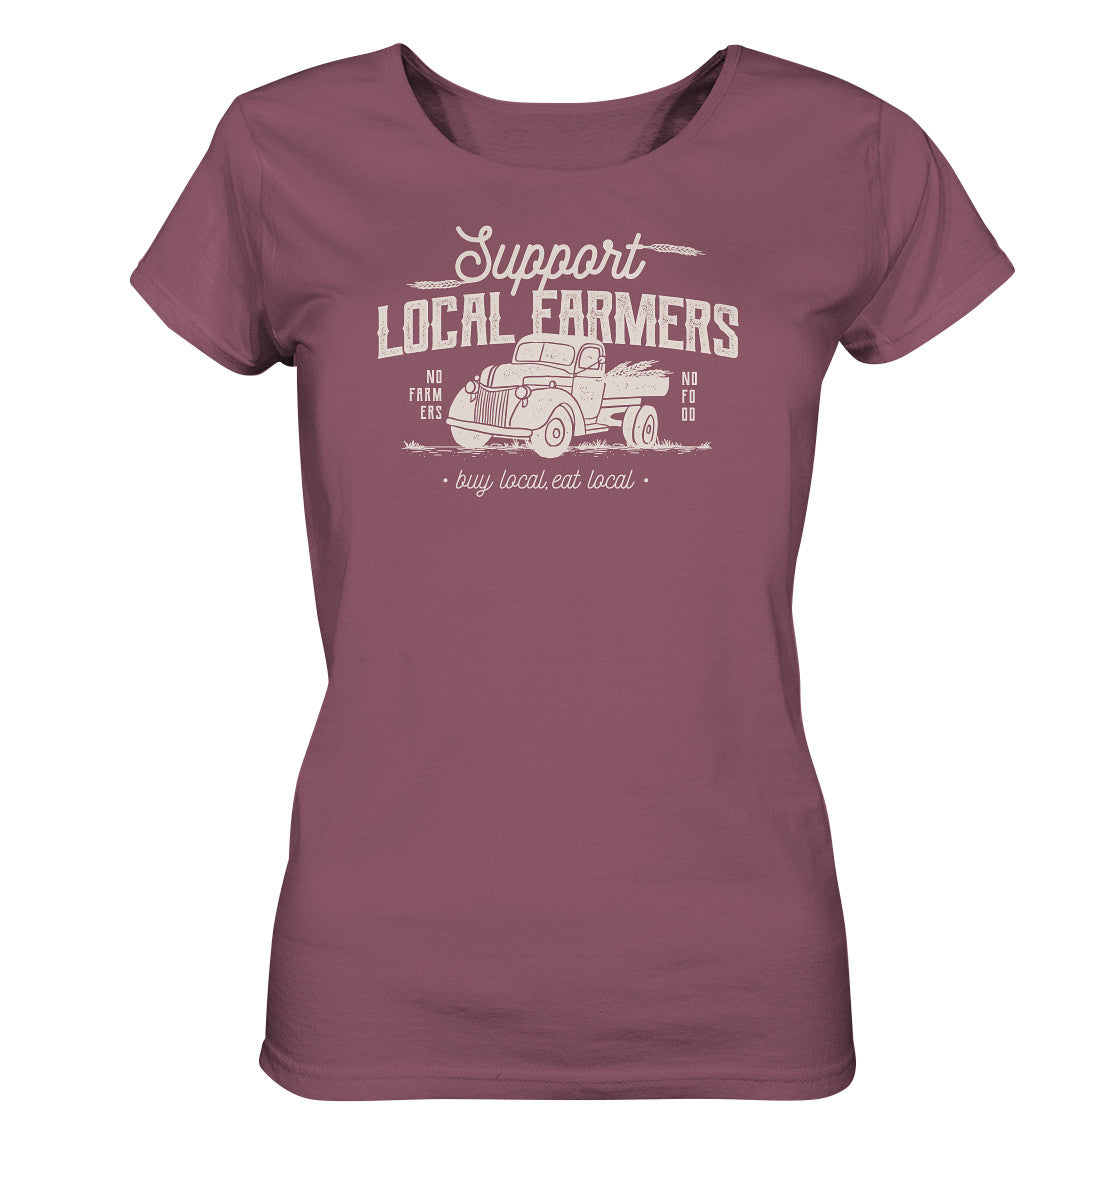 Support local Farmers. Retro Shirt Landwirt. No Farmers no food. Dorfkram® rot